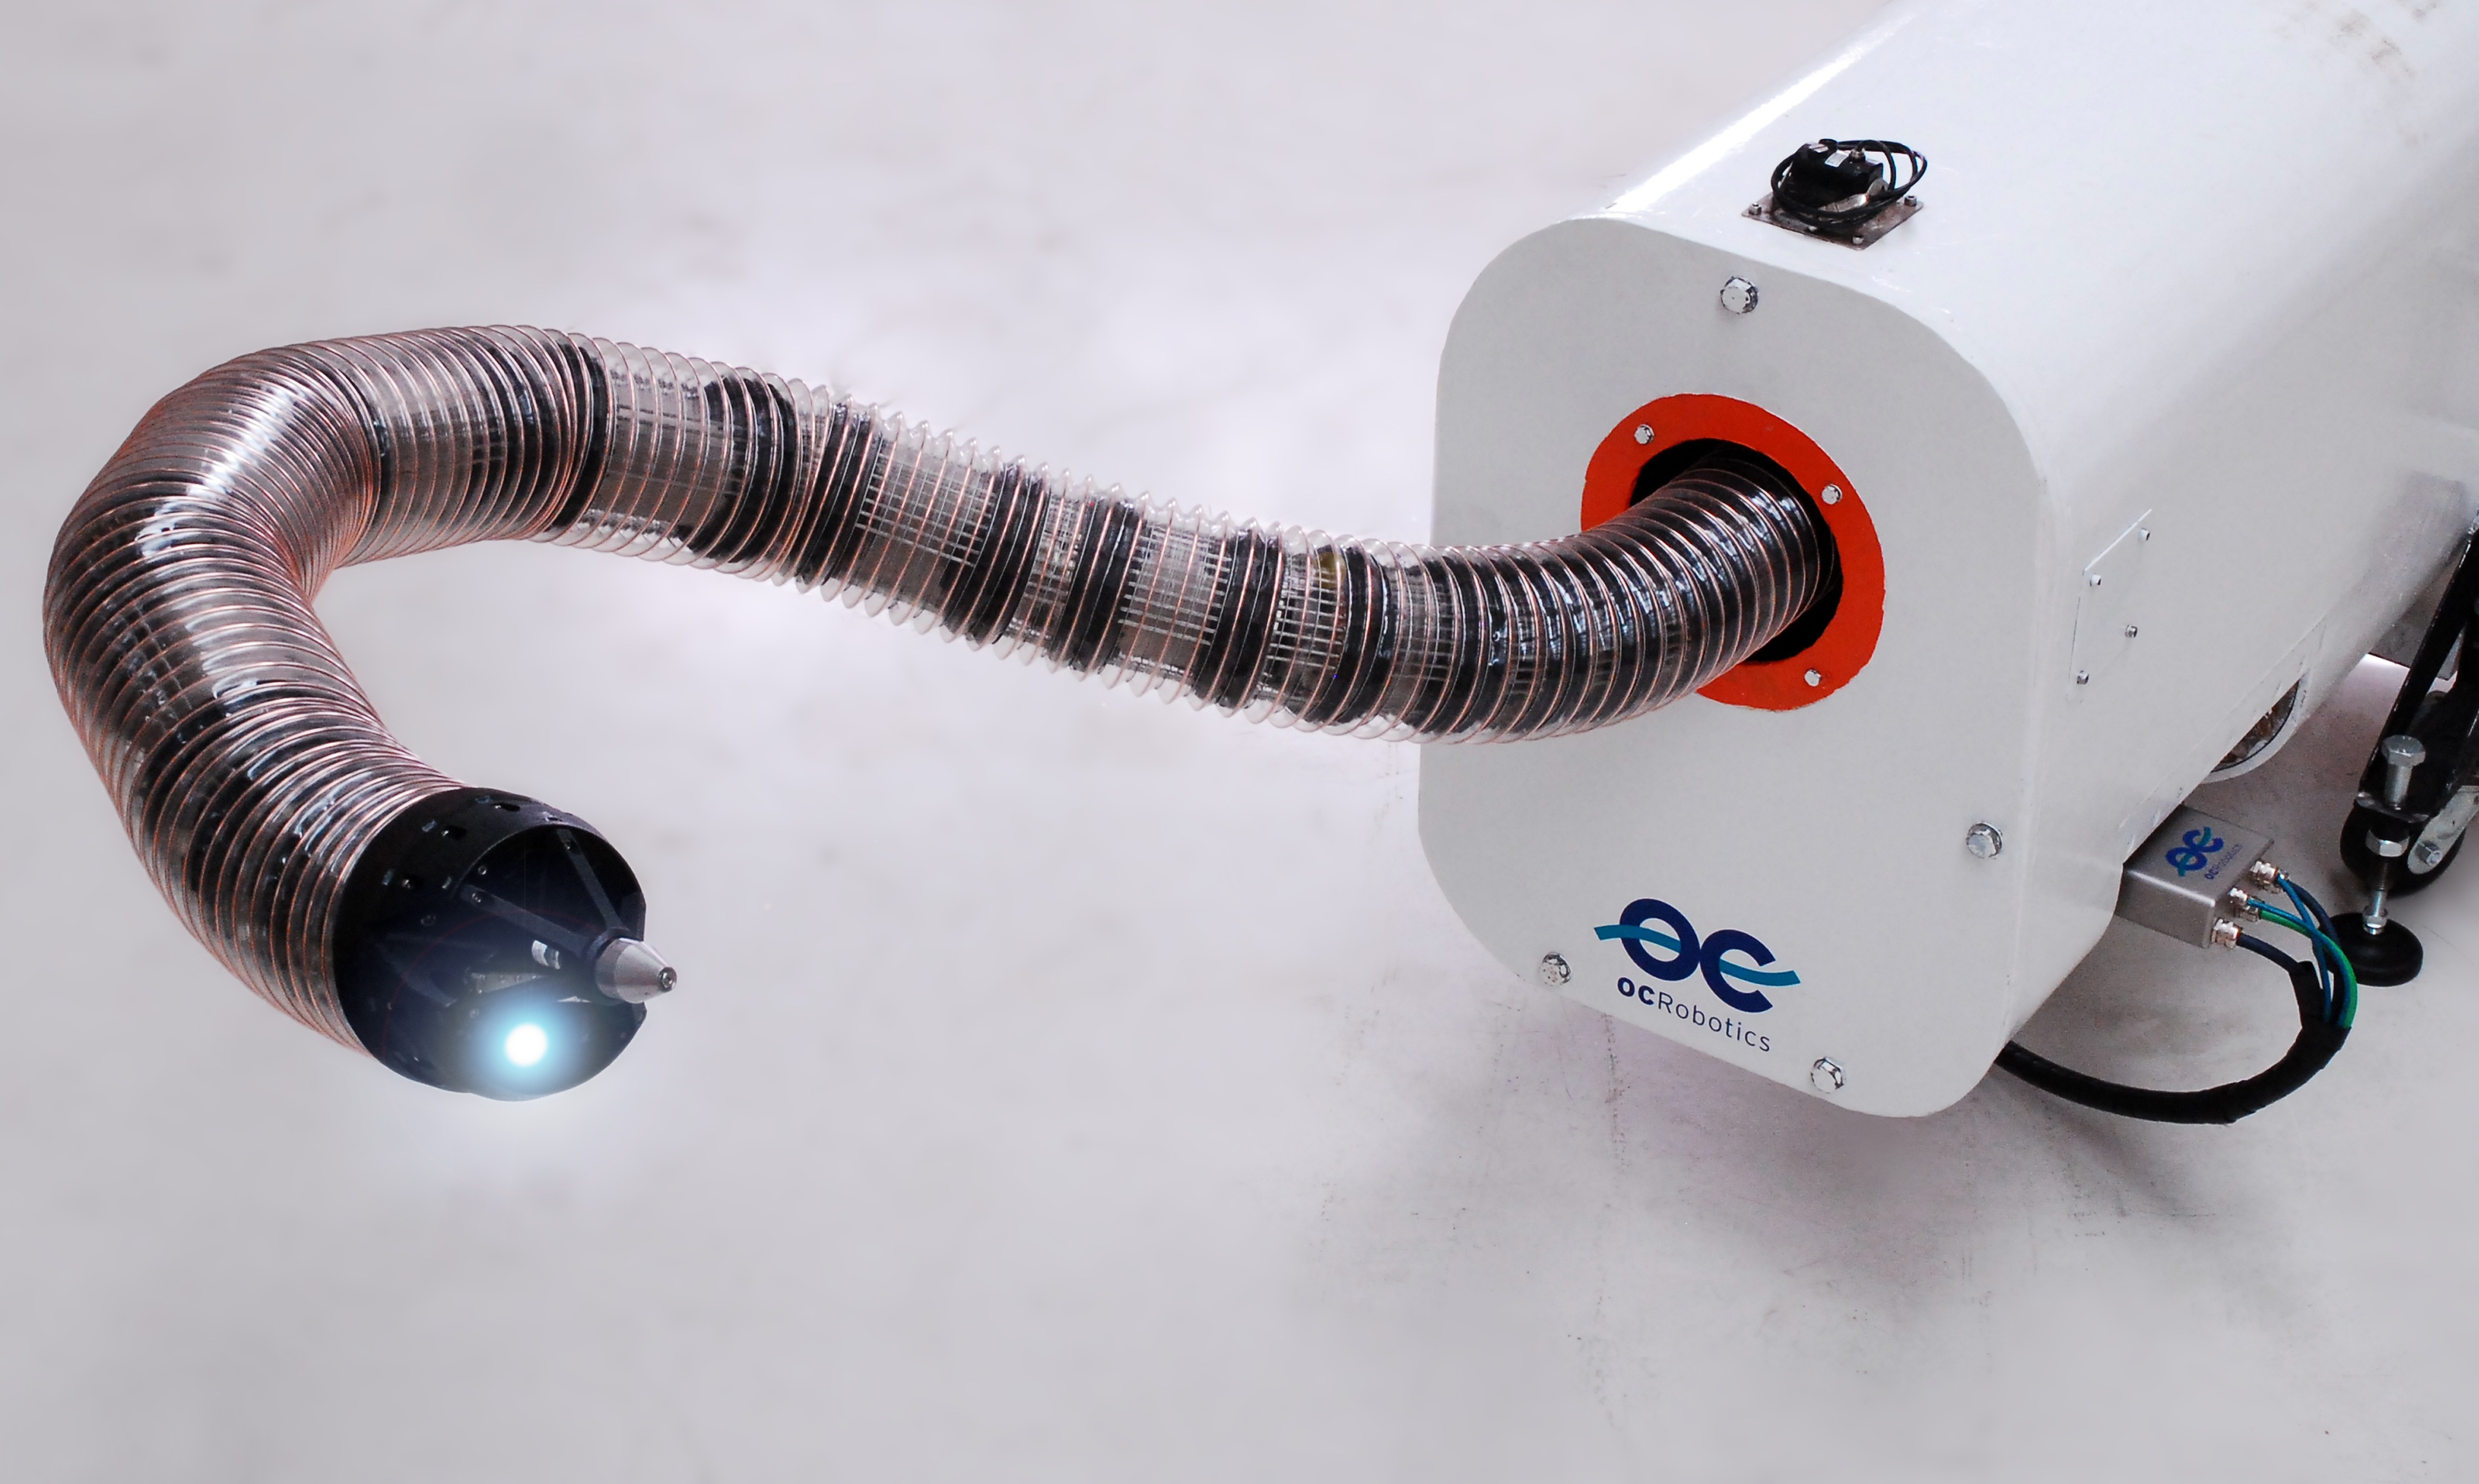 OC Robotics Receives Funding For Autonomous Scout Rover System For Mapping Hazardous Spaces